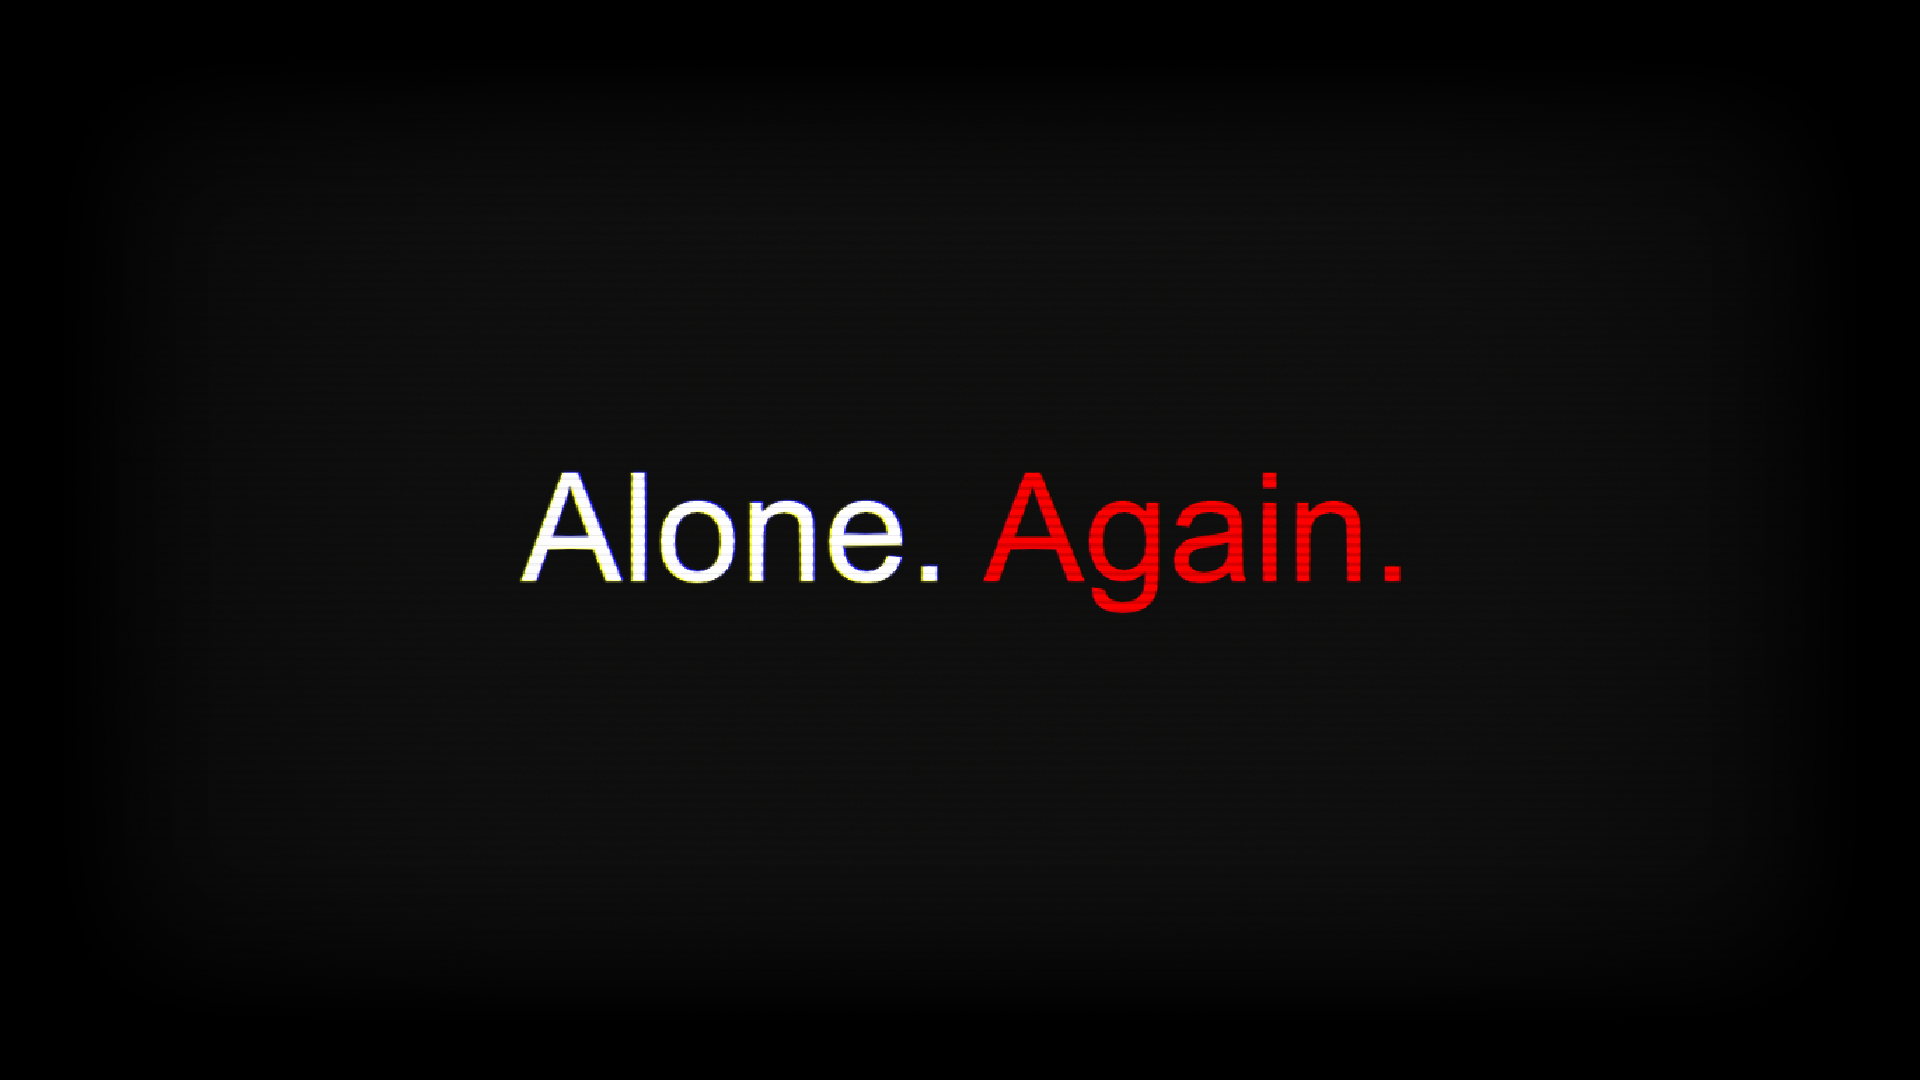 Alone. Again.